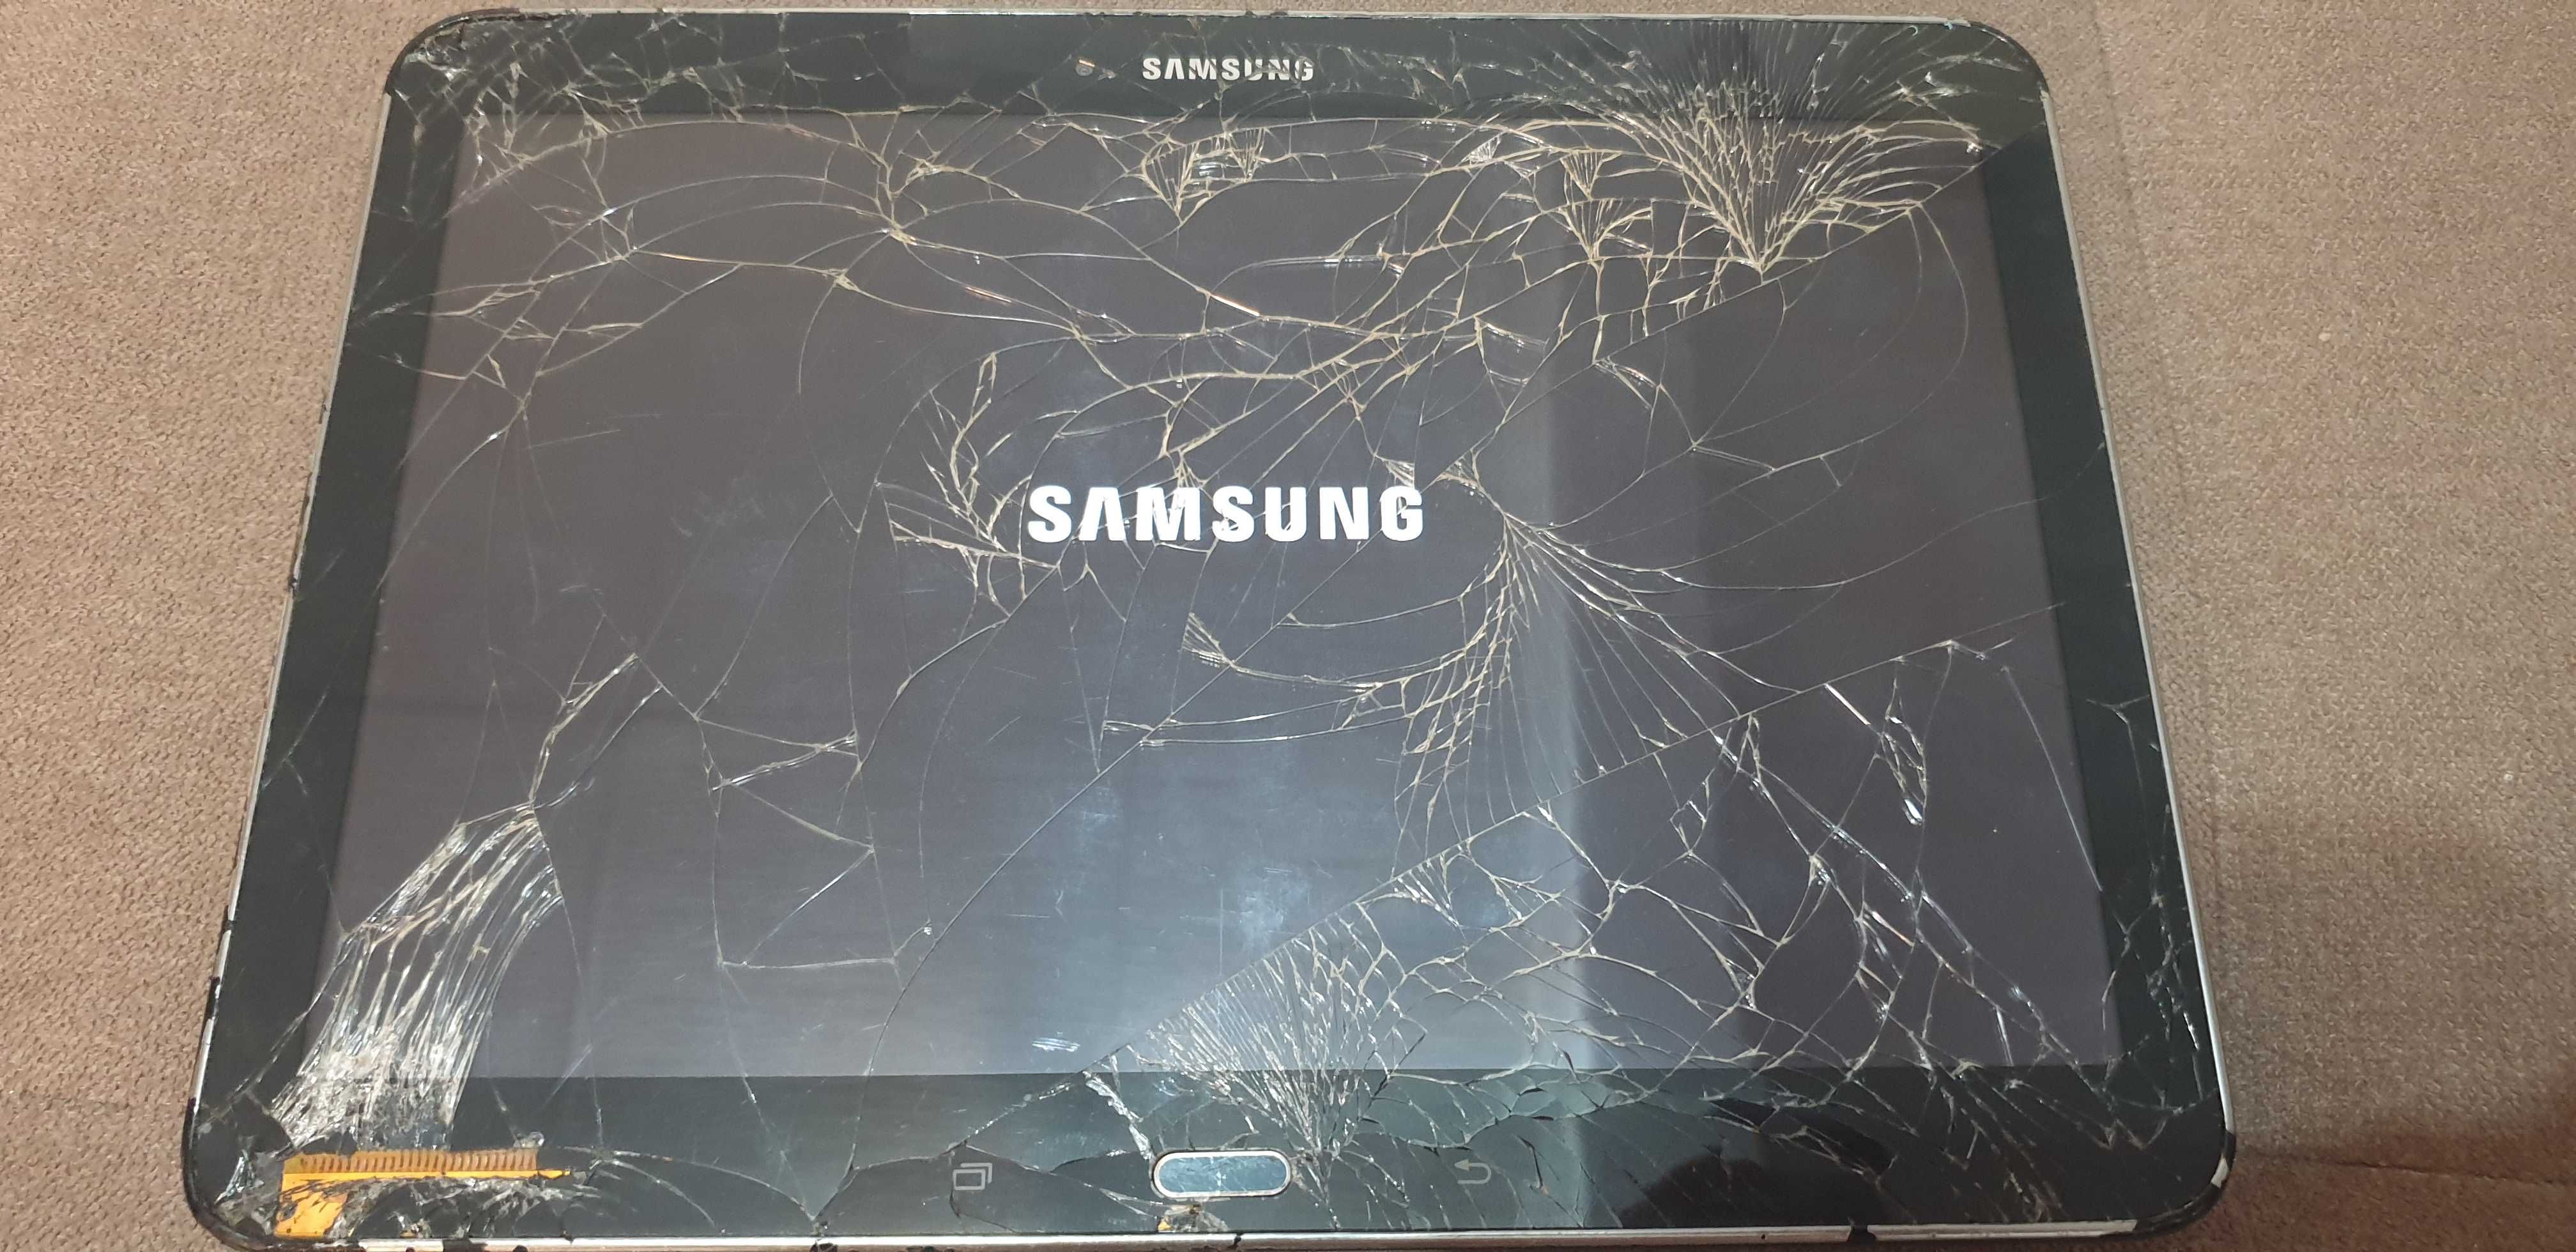 Display, Samsung Galaxy Tab 4 SM-T533 (530, 531, 535) 10.1 inch